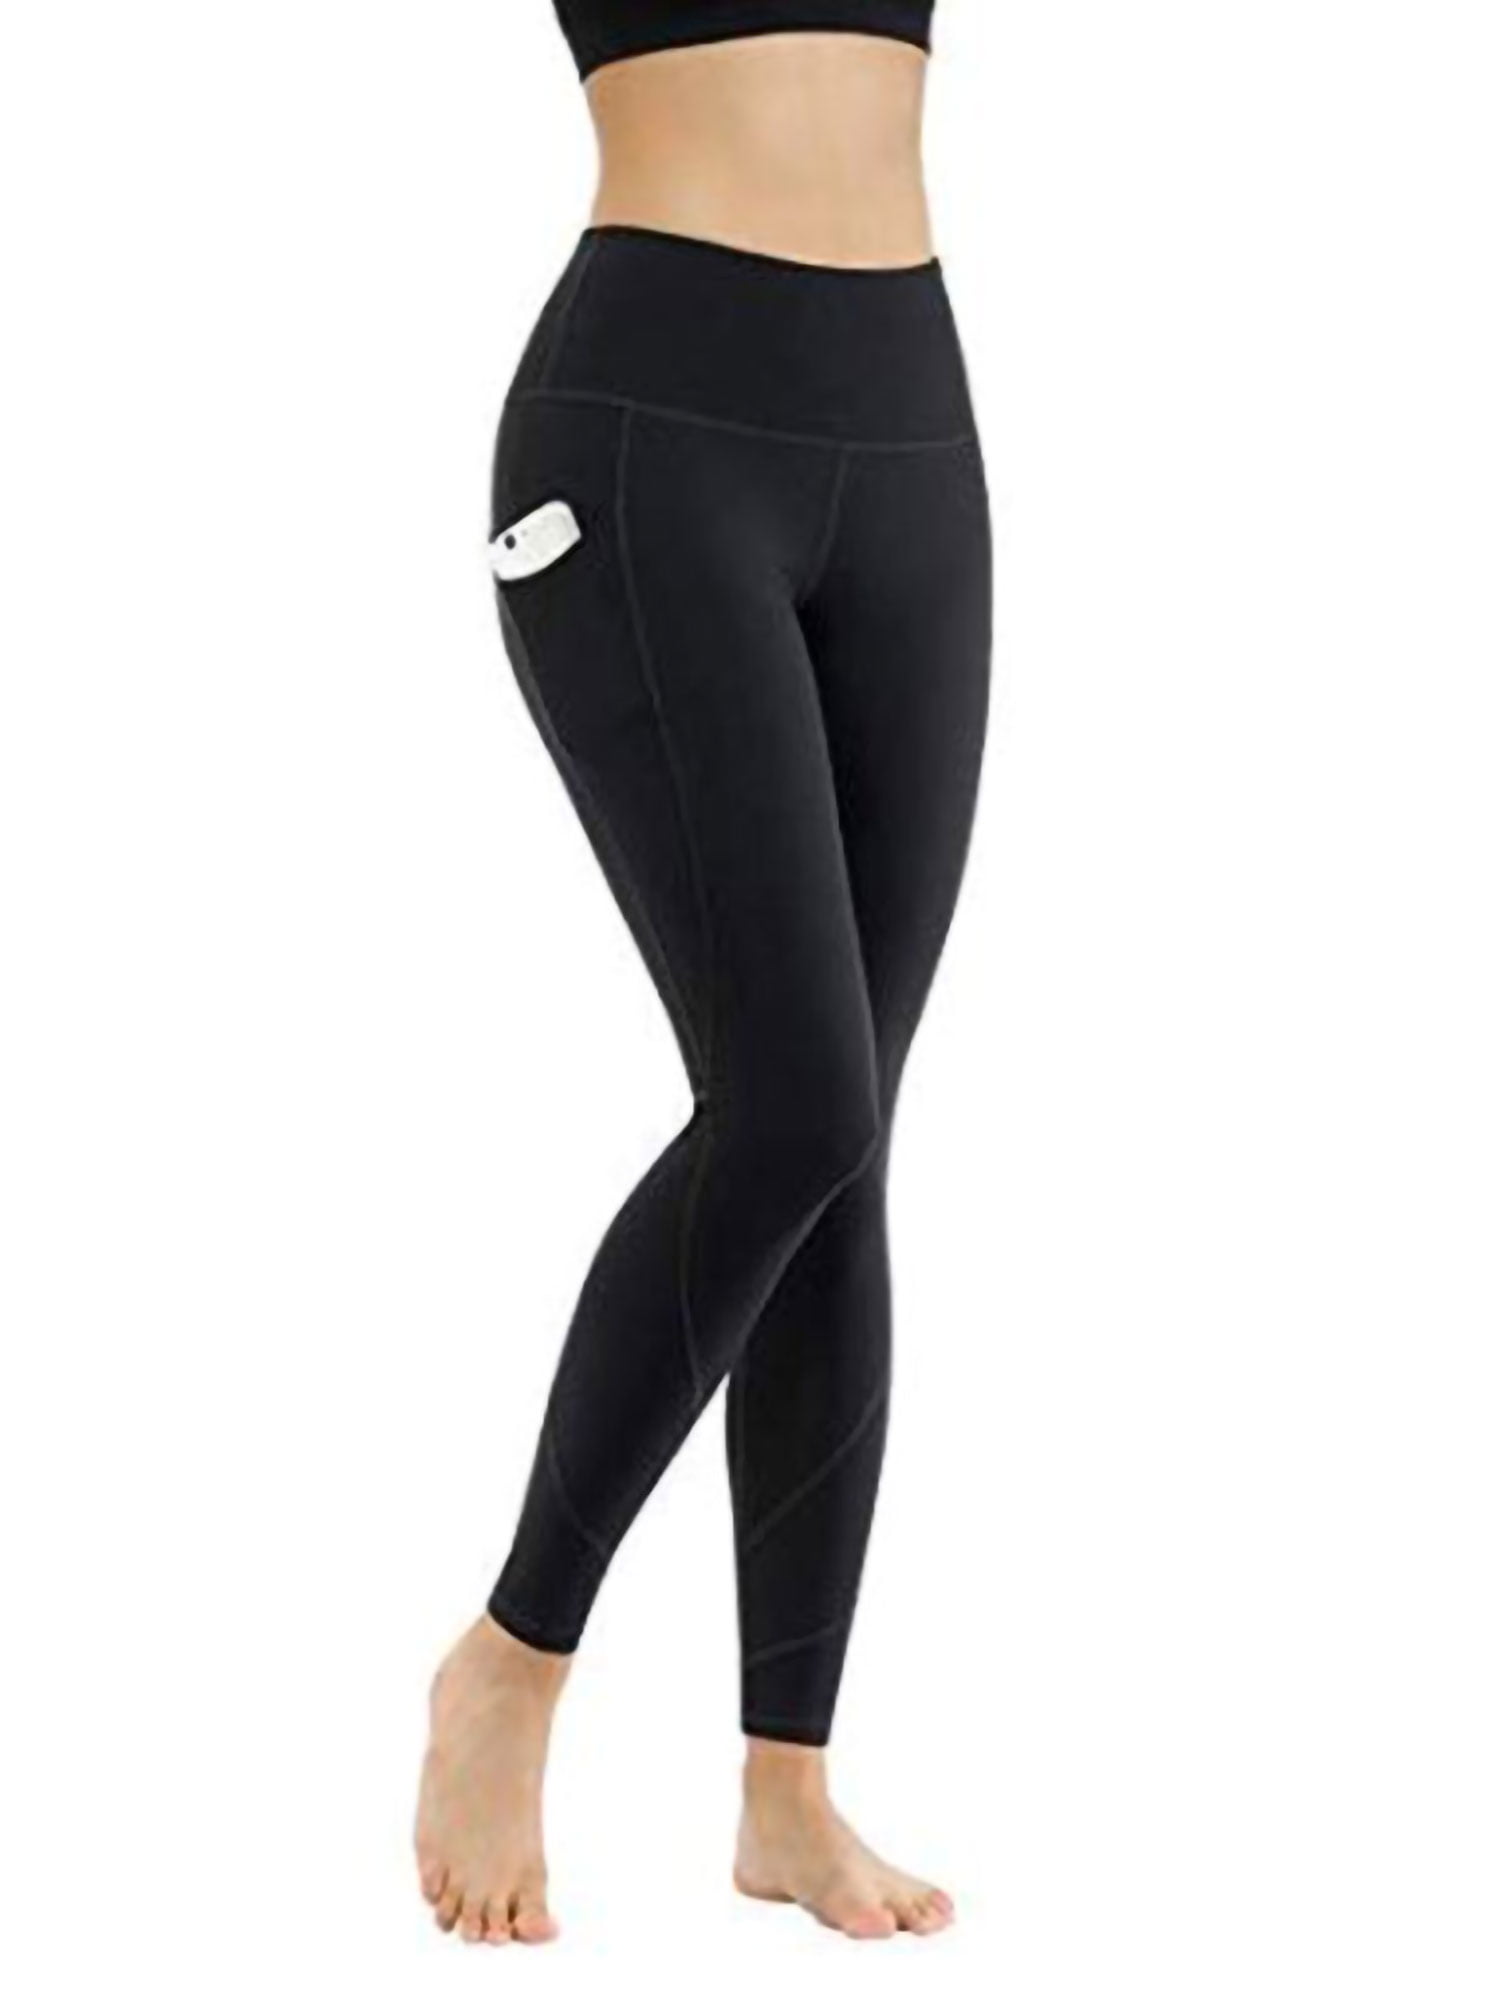 GWshop New Yoga Leggings,omens Fashion Workout Leggings Fitness Sports Gym Running Yoga Athletic Pants Sports Pants